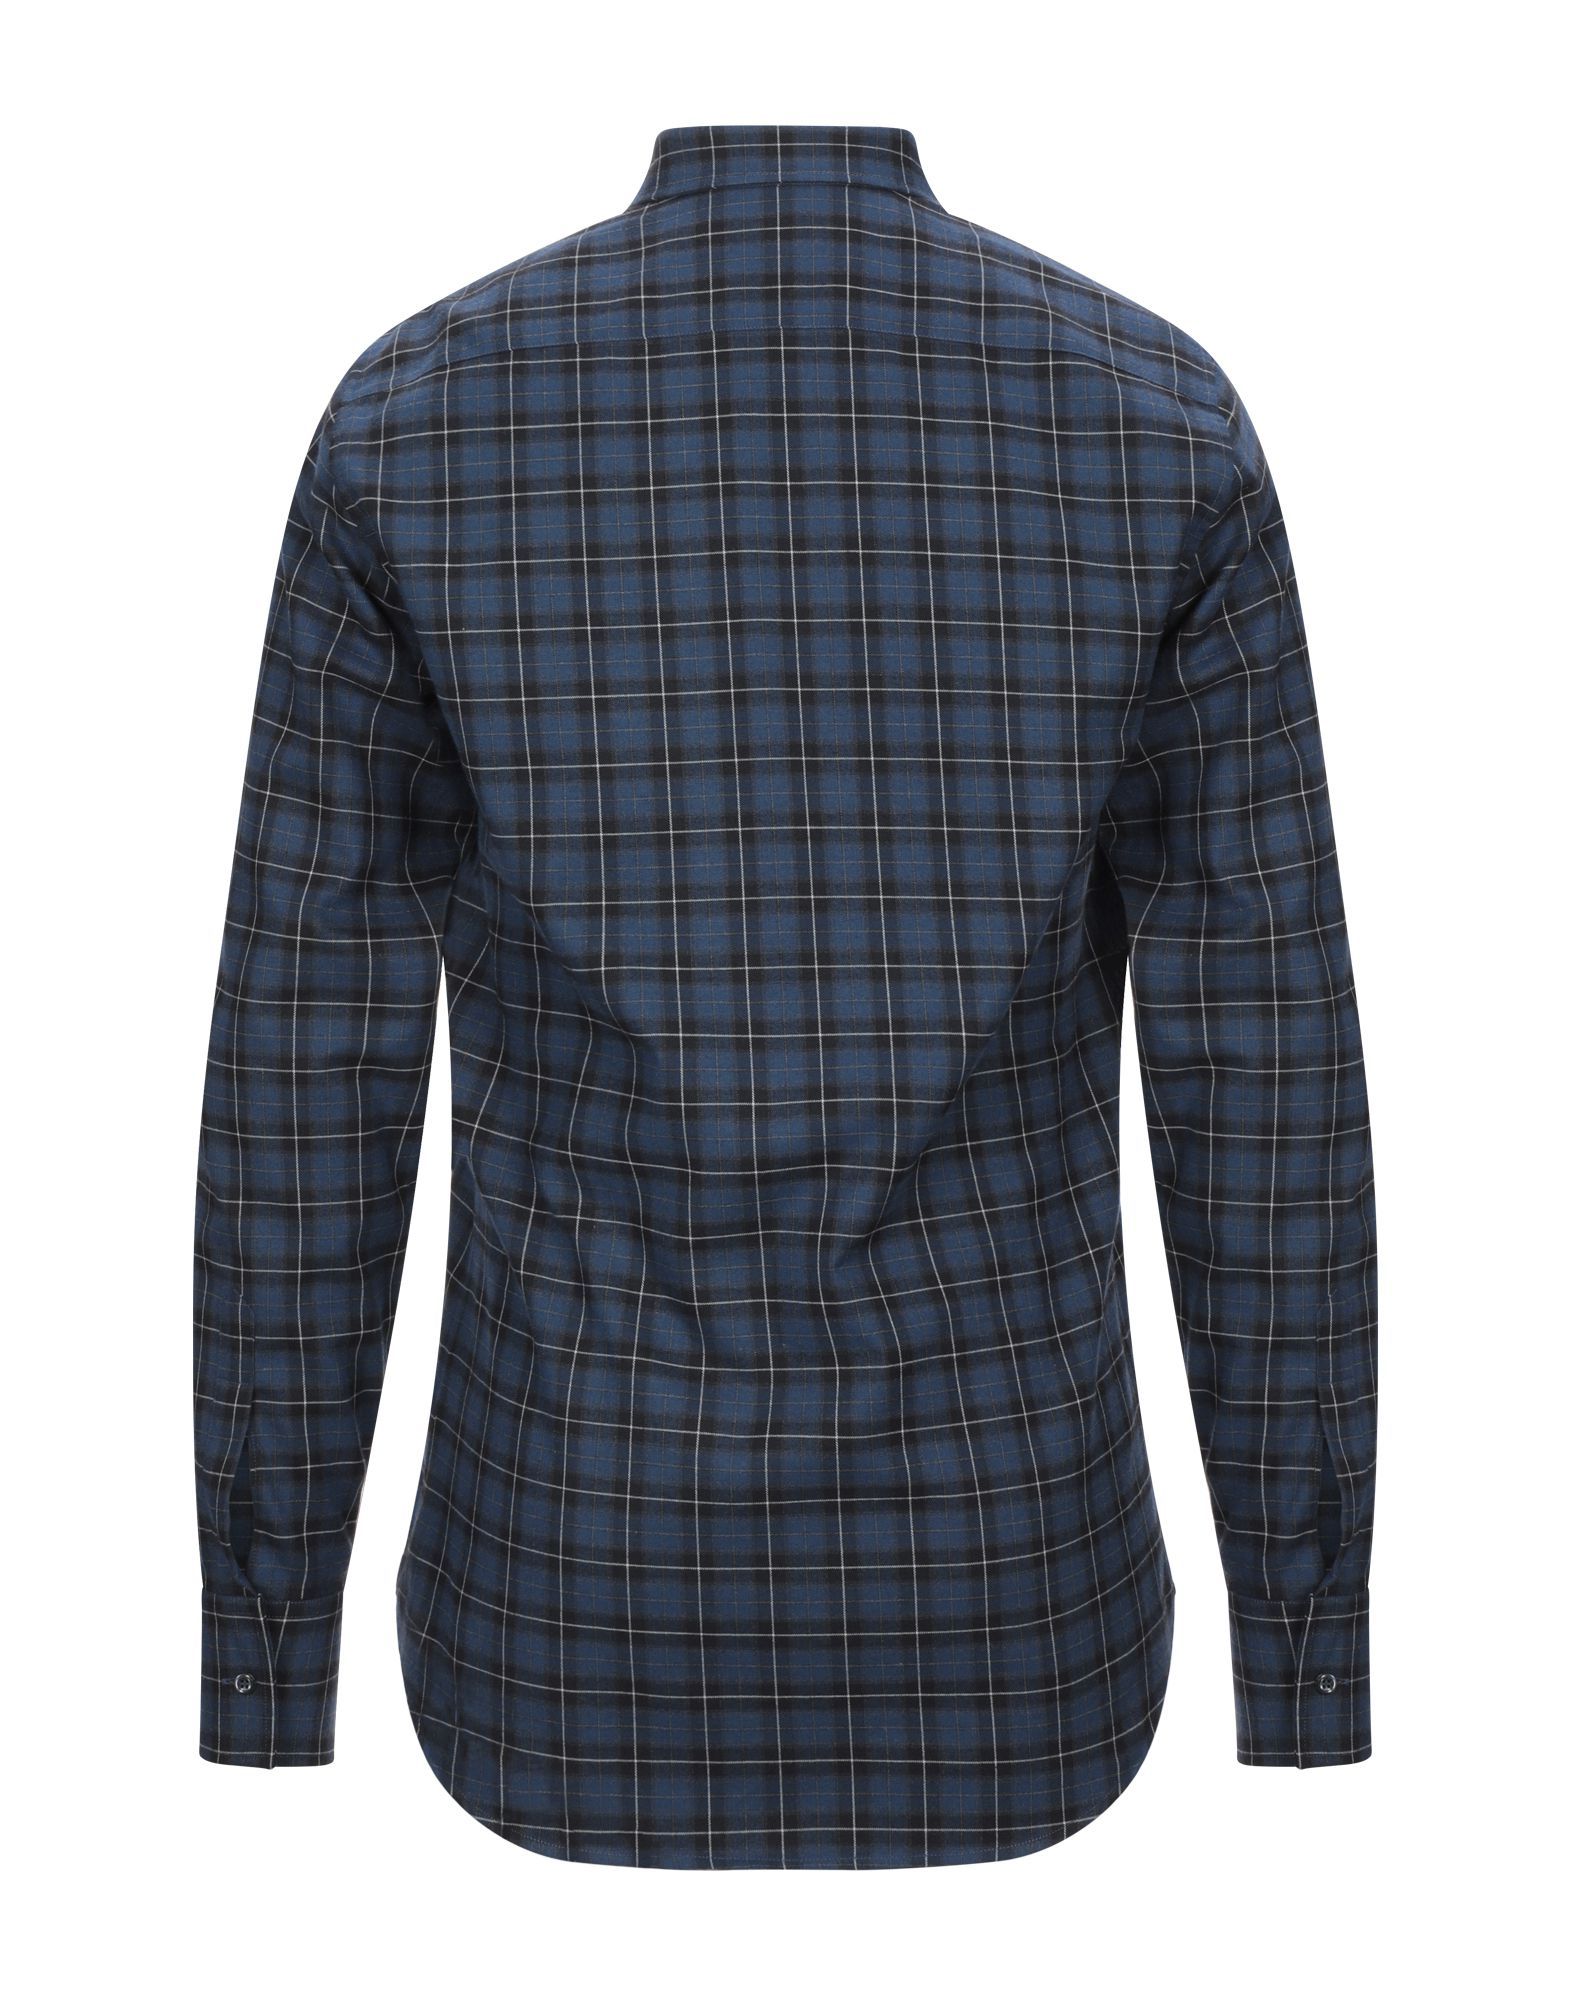 flannel, tartan plaid, no appliqués, front closure, button closing, long sleeves, buttoned cuffs, classic neckline, no pockets